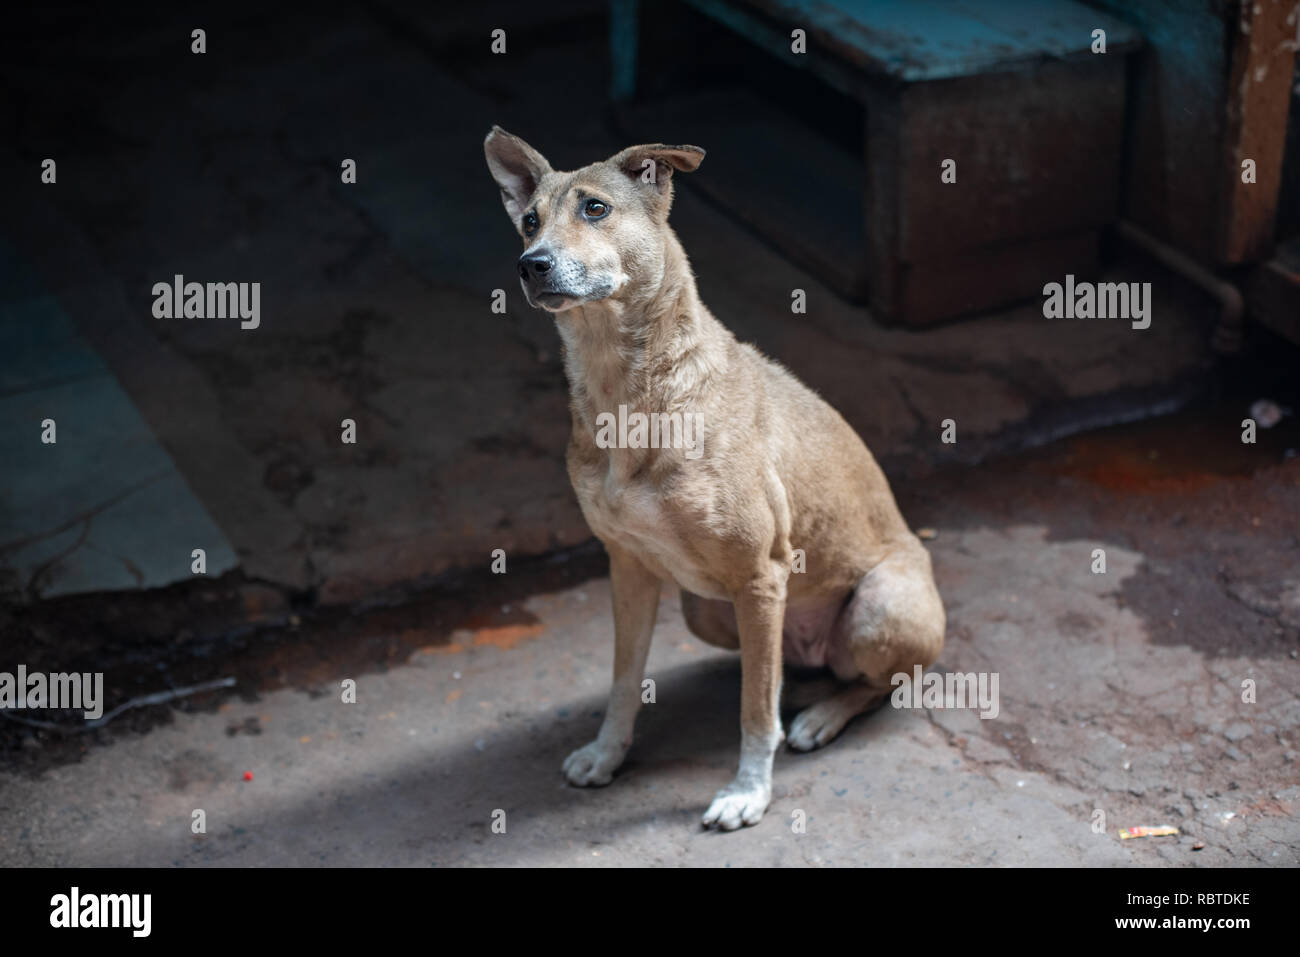 A stray dog in Chandni Chowk, Delhi, India Stock Photo